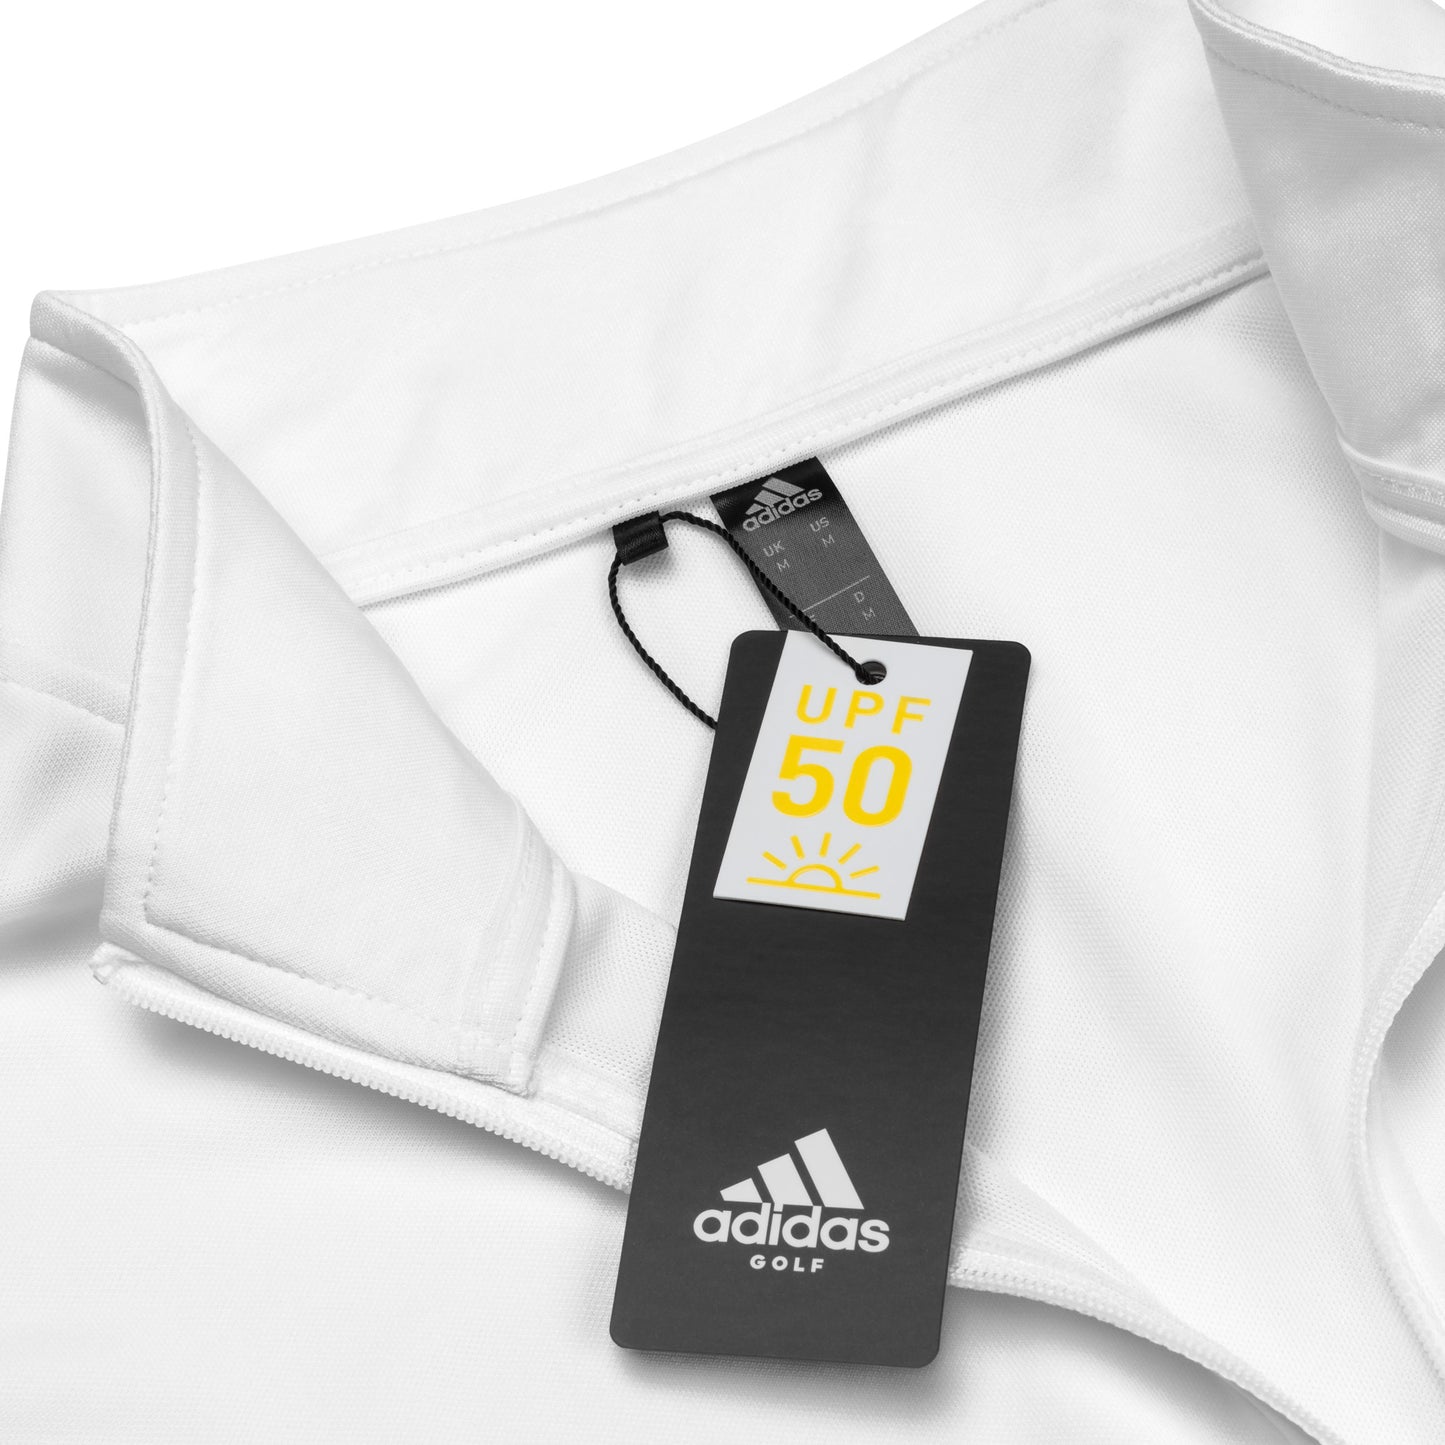 Adidas | Men's quarter zip pullover - Eastern States